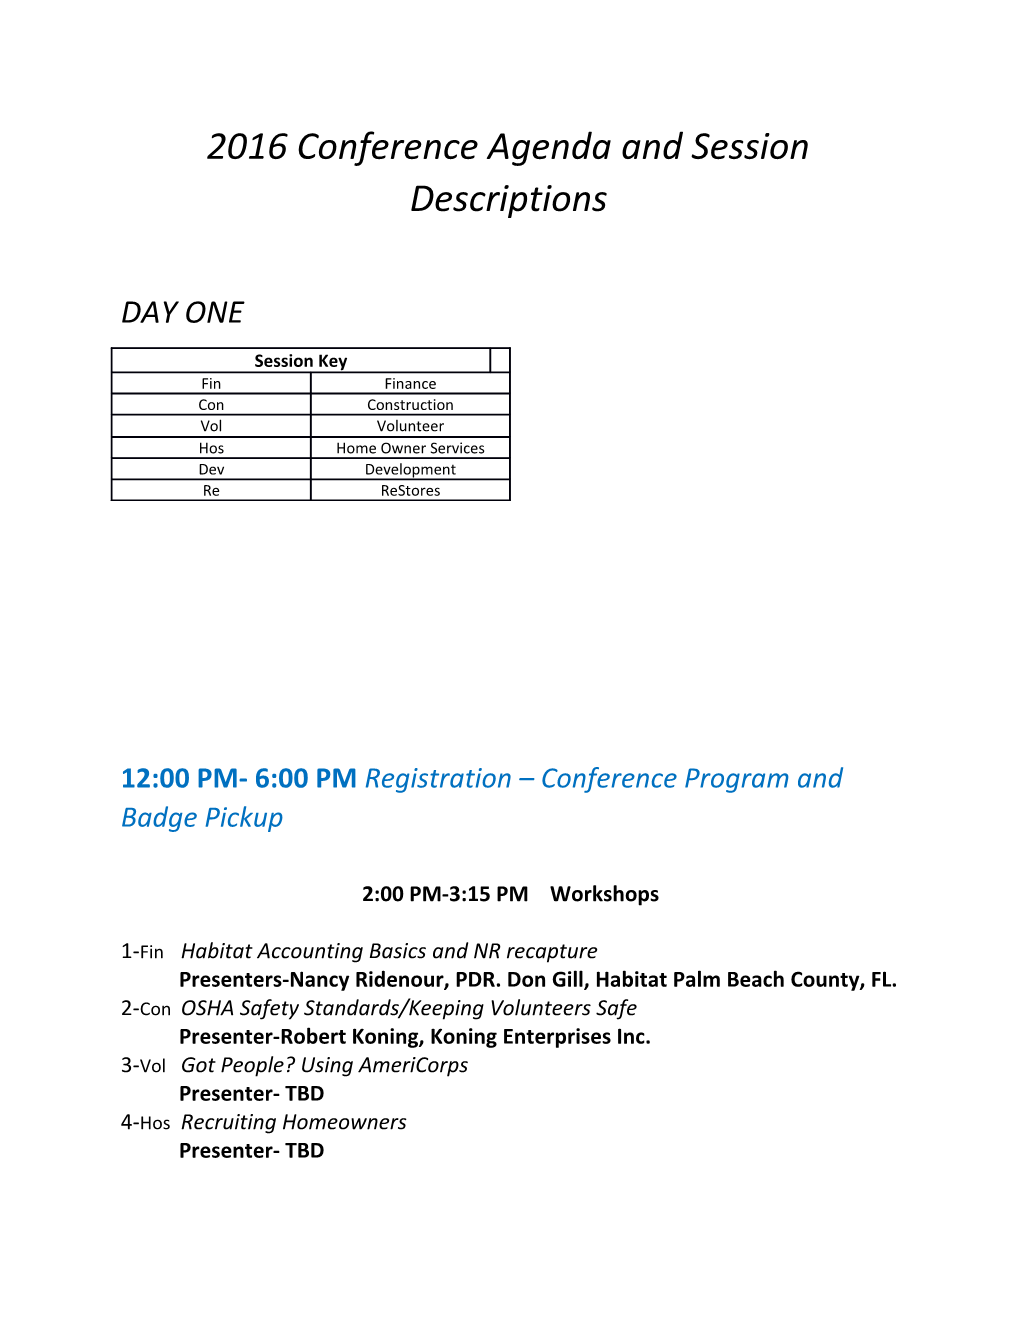 2016 Conference Agenda and Session Descriptions